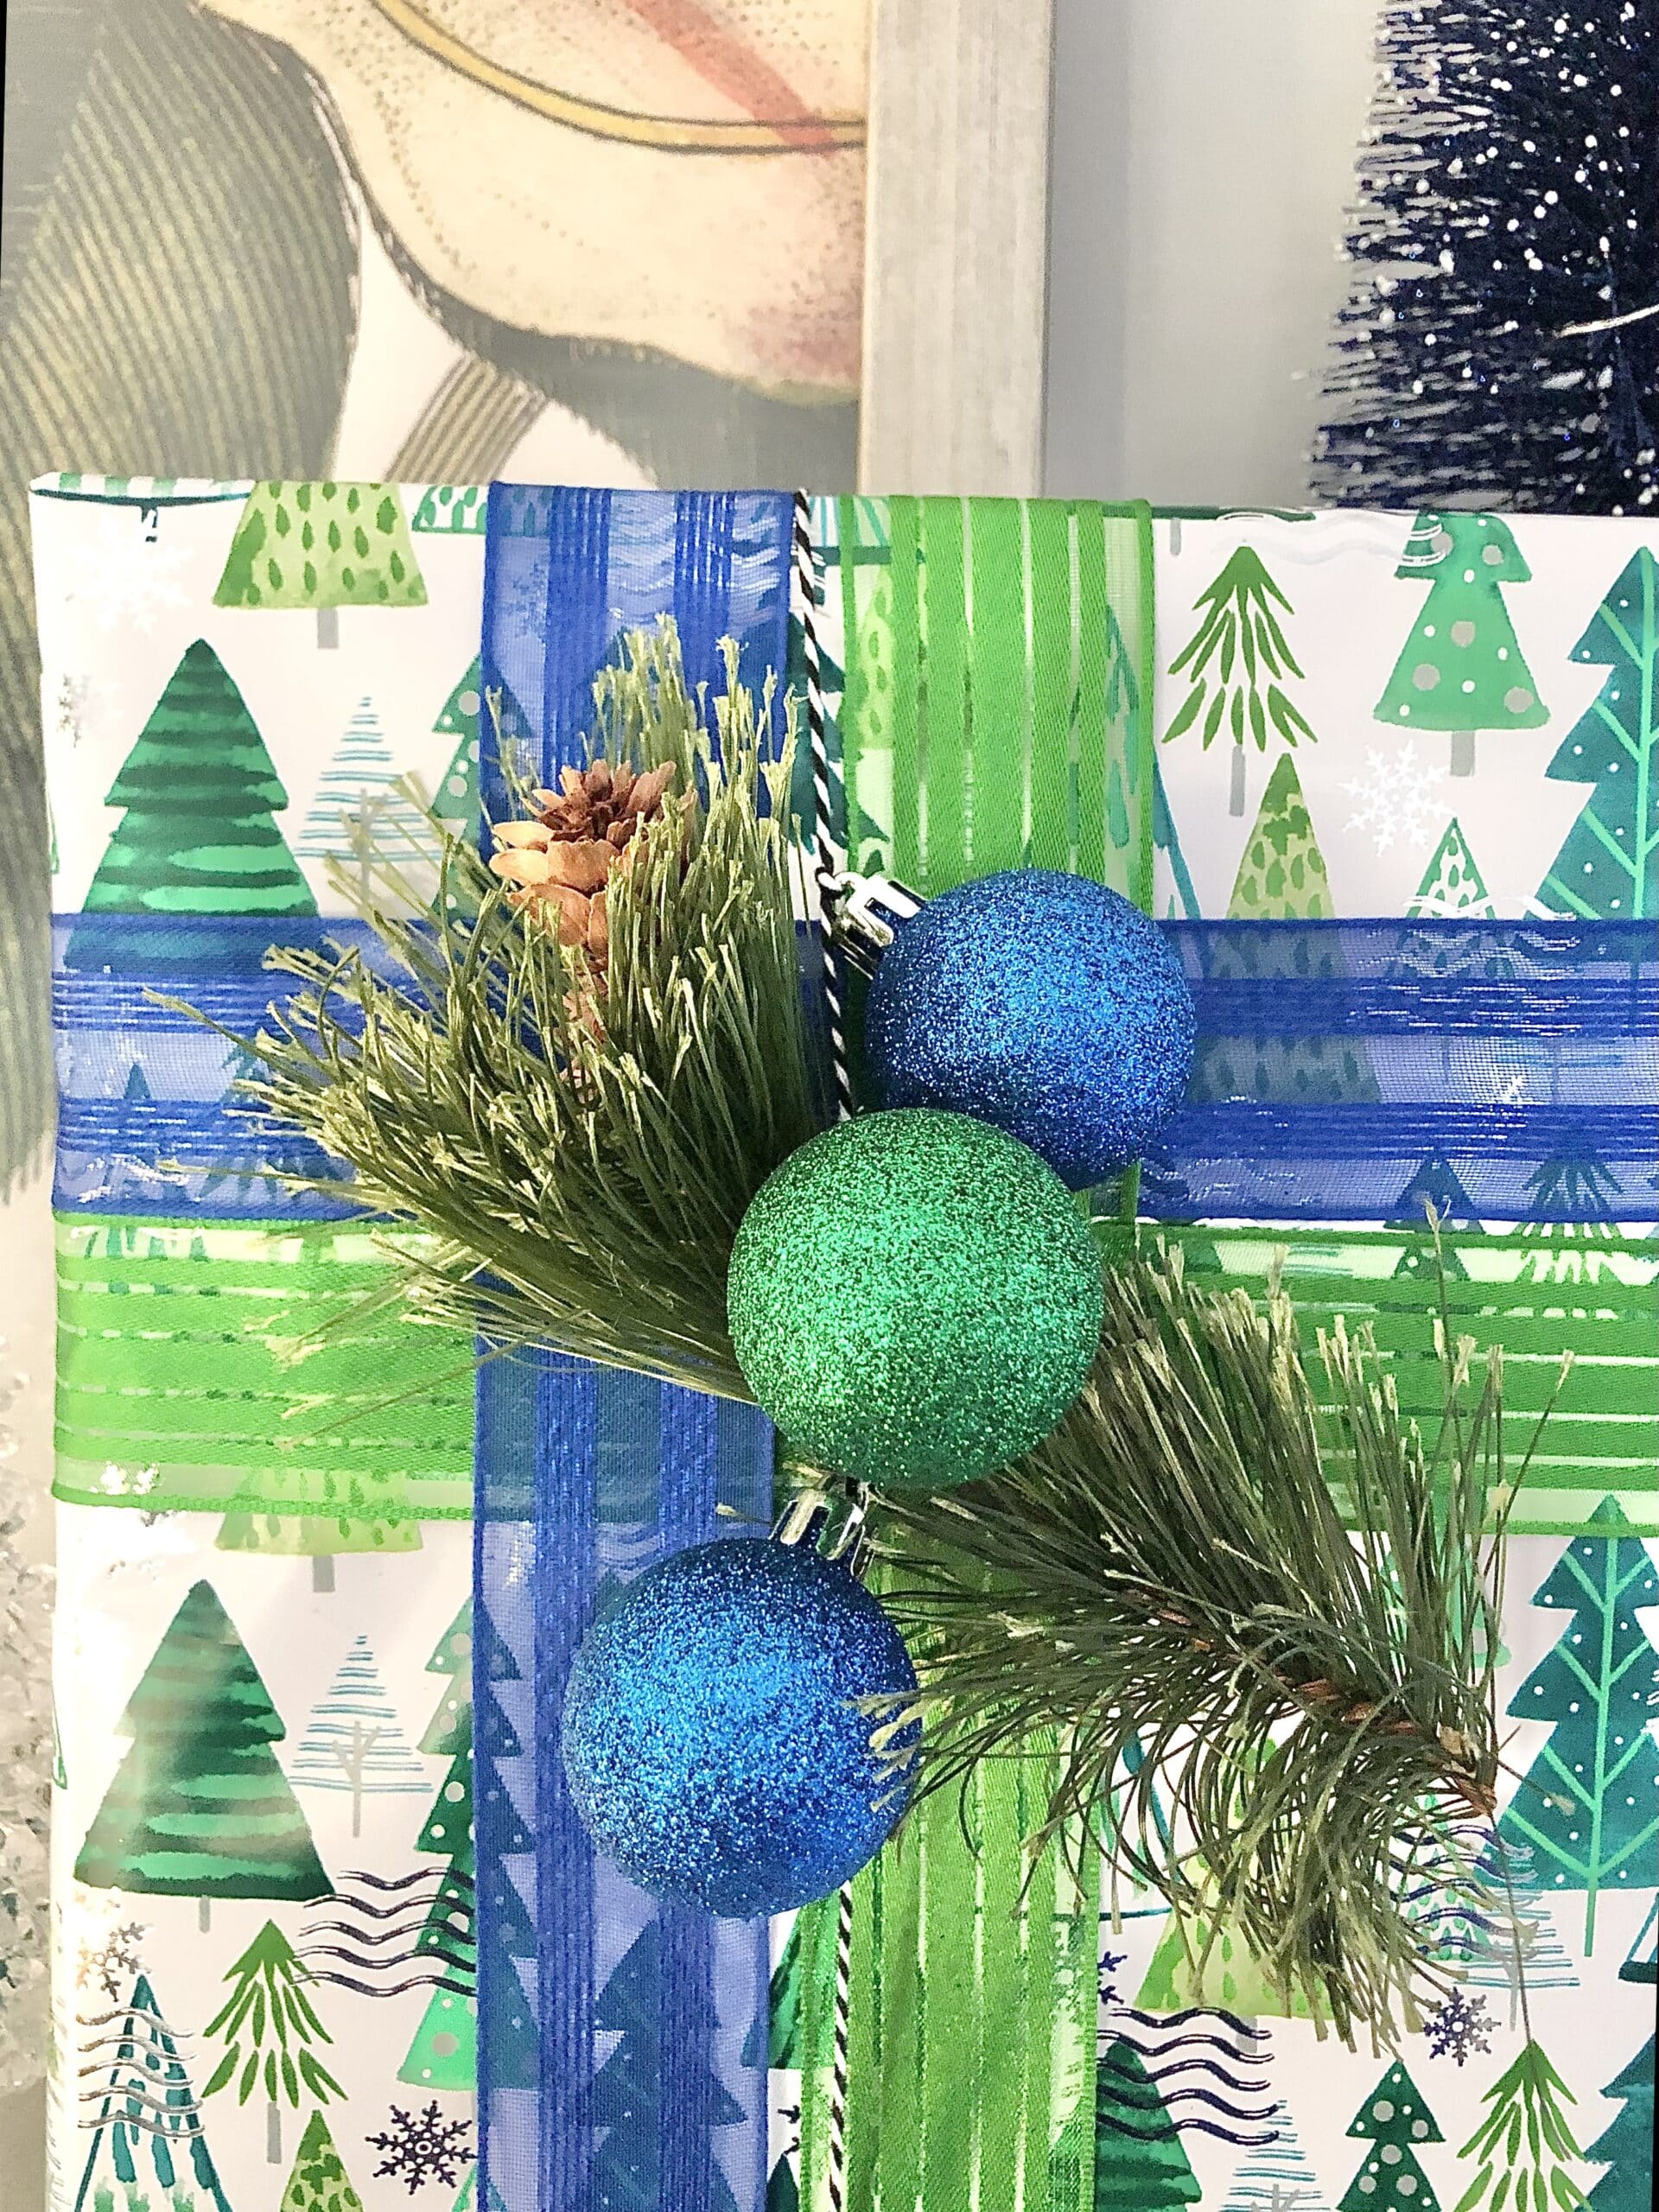 https://www.sonatahomedesign.com/wp-content/uploads/2022/12/Green-and-Blue-Christmas-Gift-Wrap-Idea-Sonata-Home-Design-scaled.jpg